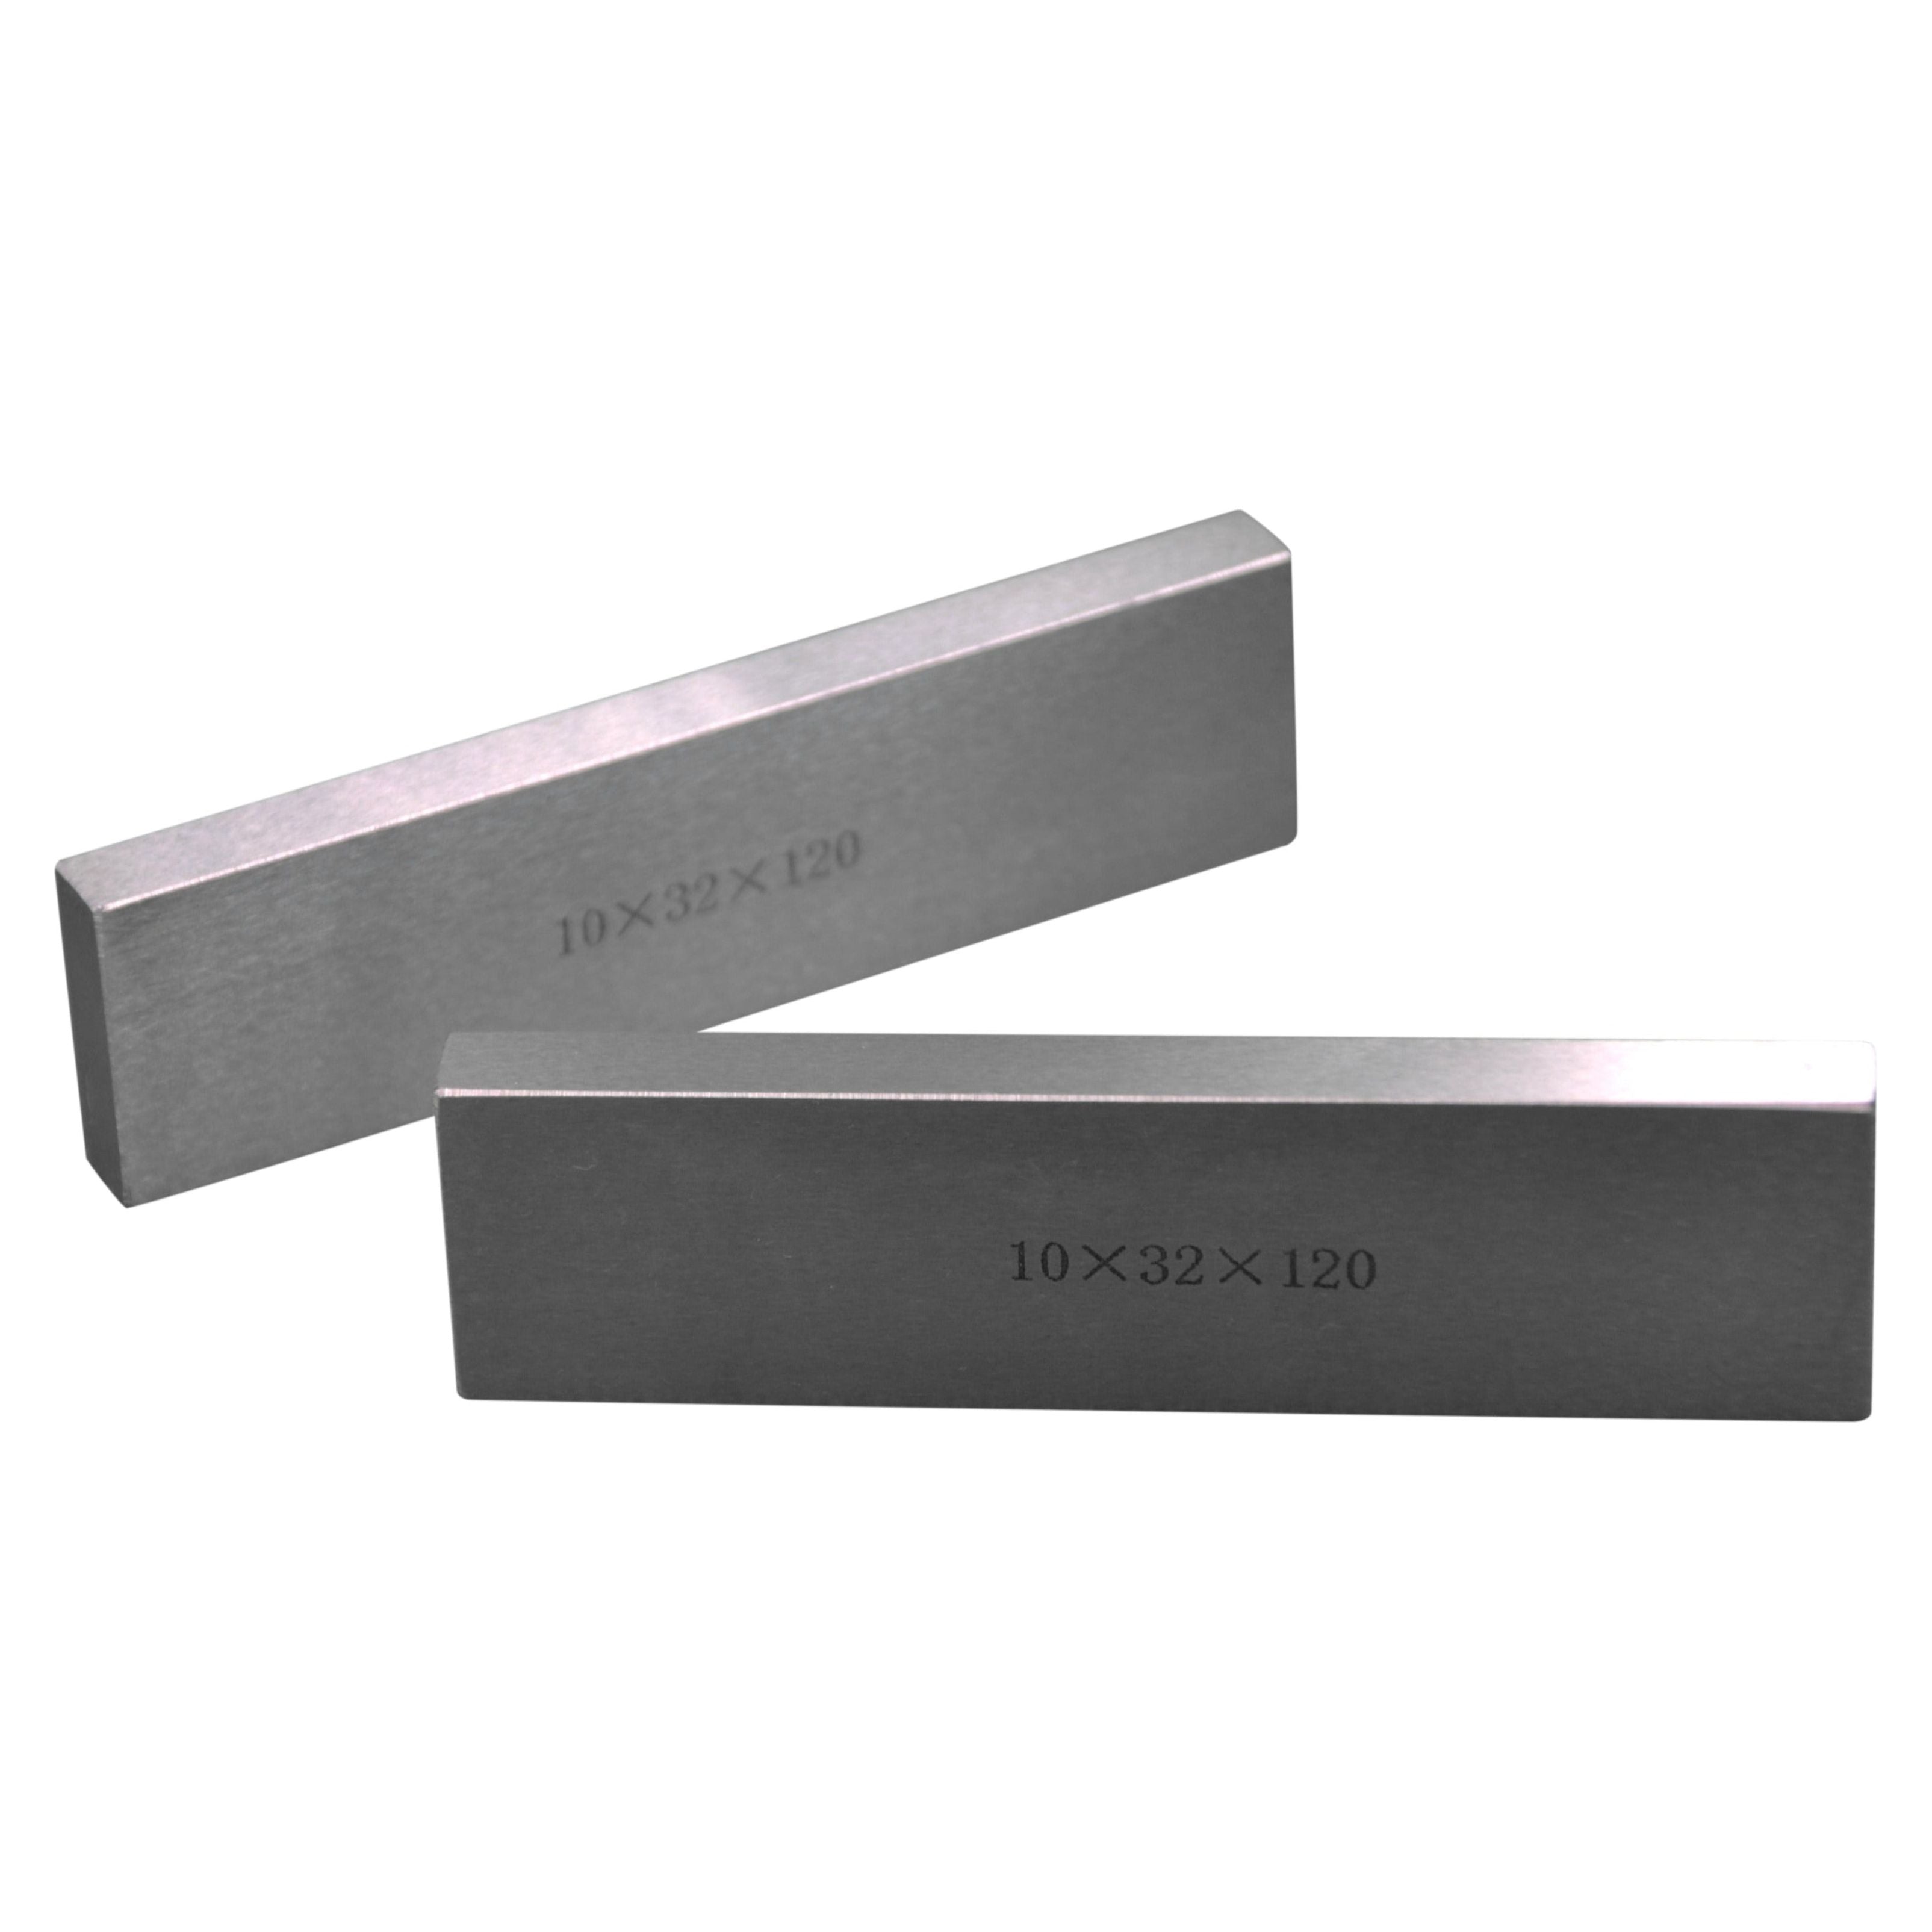 12 Pairs Parallel Steel Gauge Block Set 24 Piece 10mm Thick 120mm Length